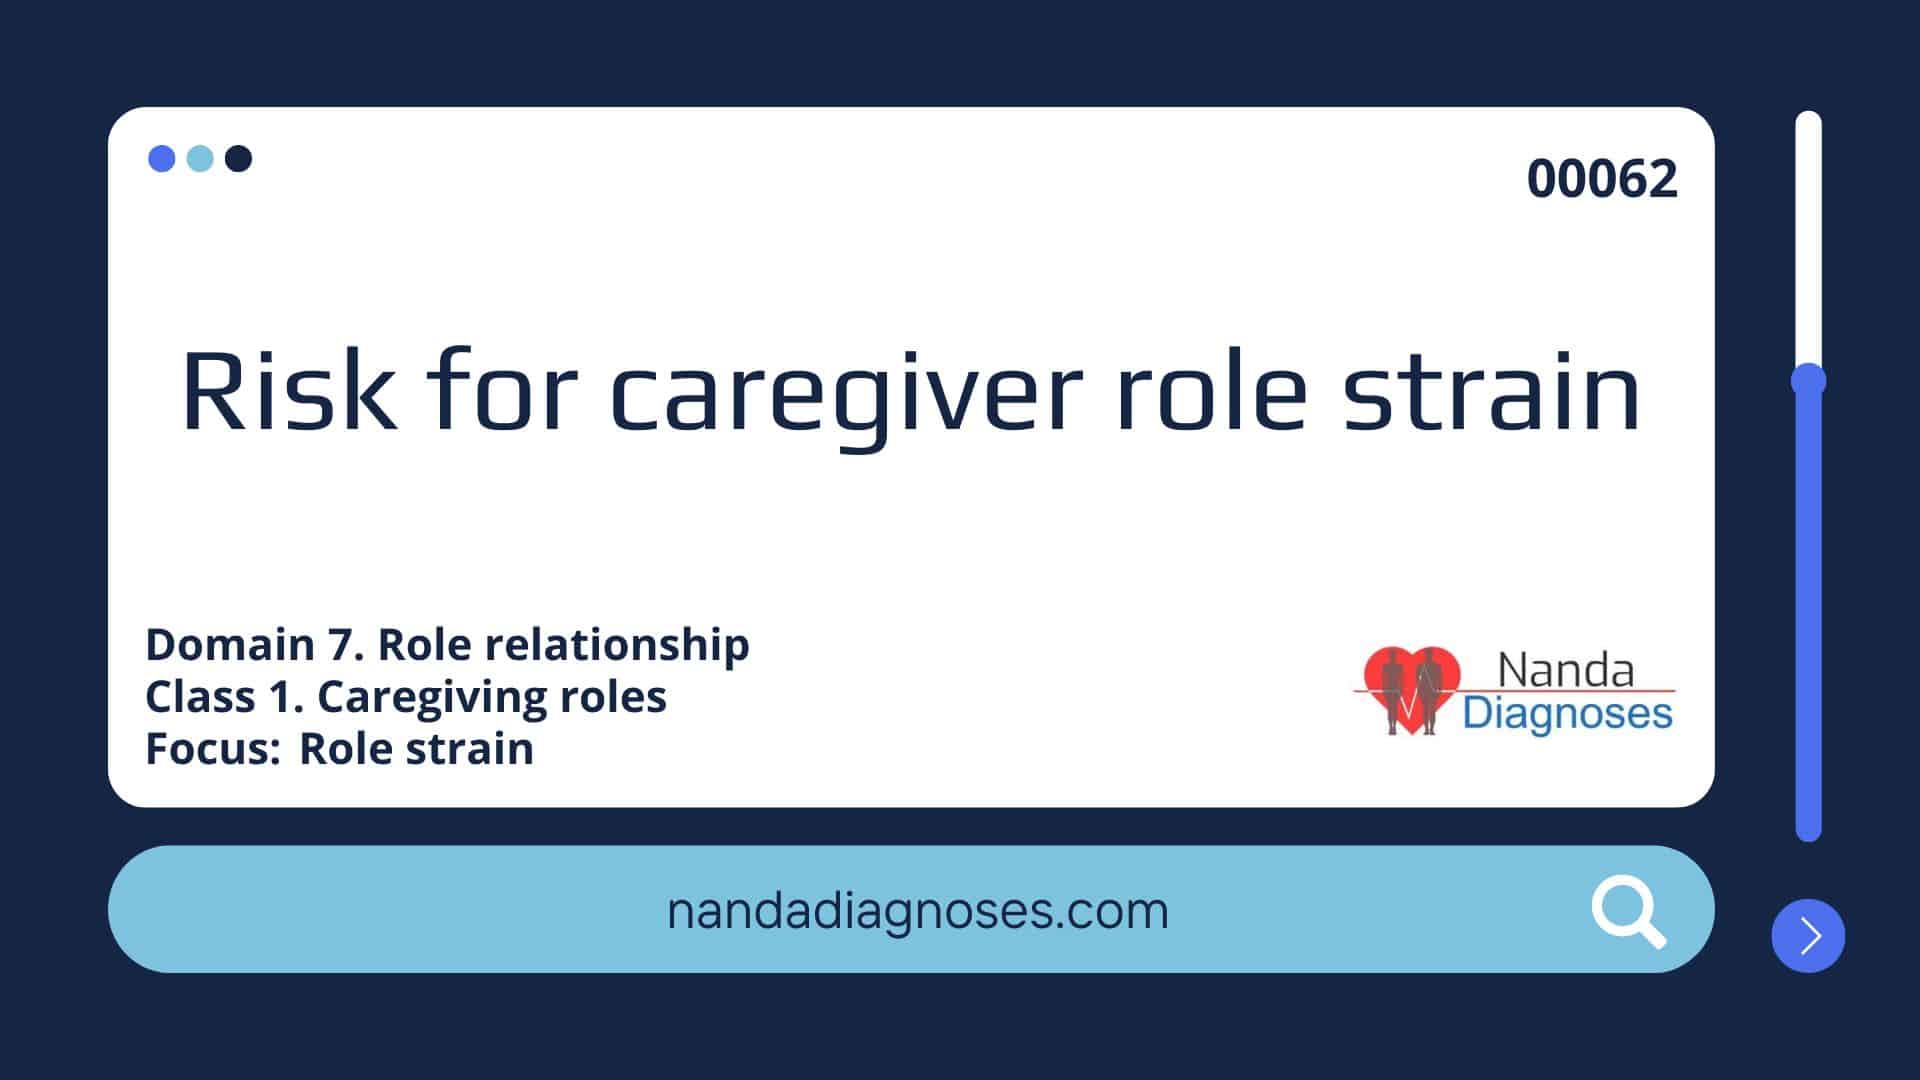 Nursing diagnosis Risk for caregiver role strain